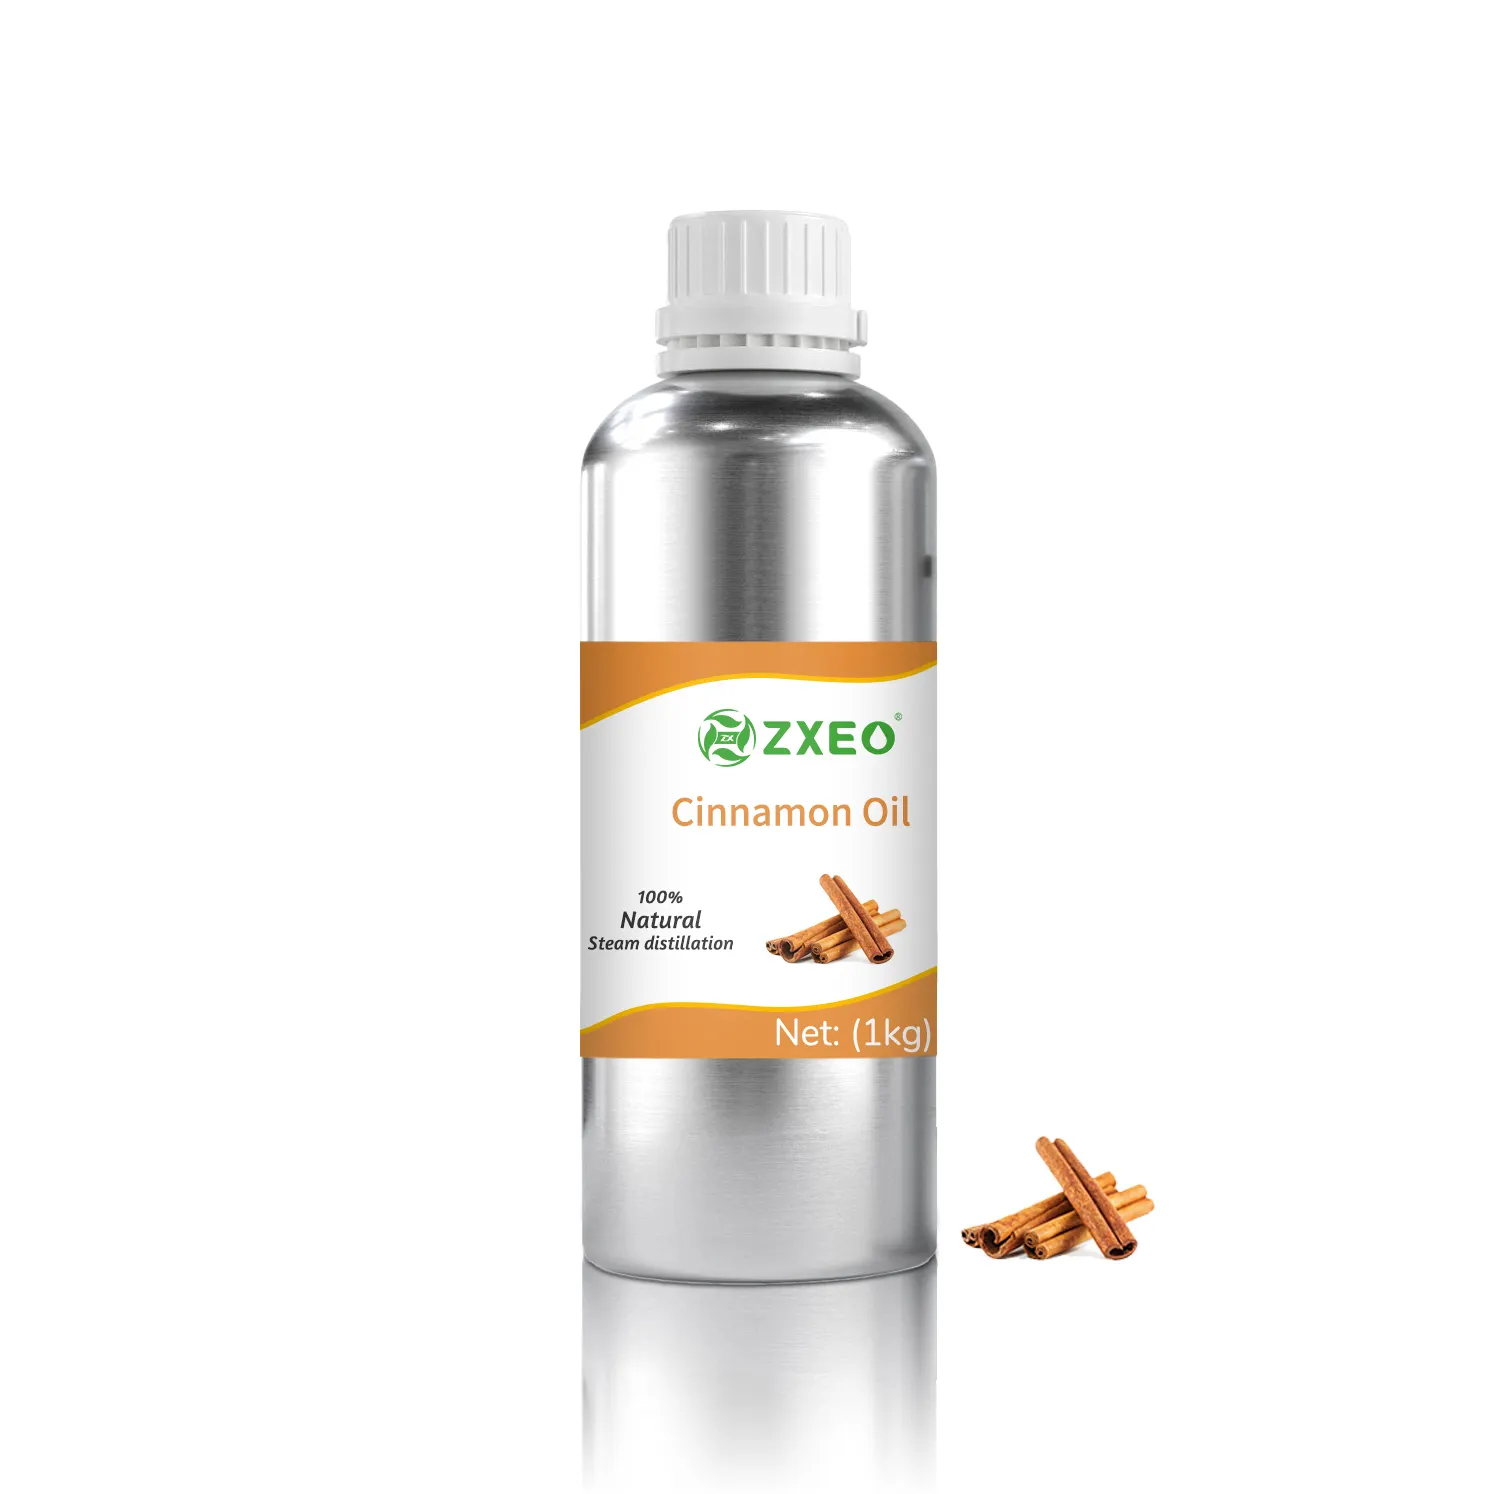 New Organic 100% Pure Cinnamon Essential Oil For Skin, Hair, And Cosmetic Uses - Cinnamon Essential Oil At Sale